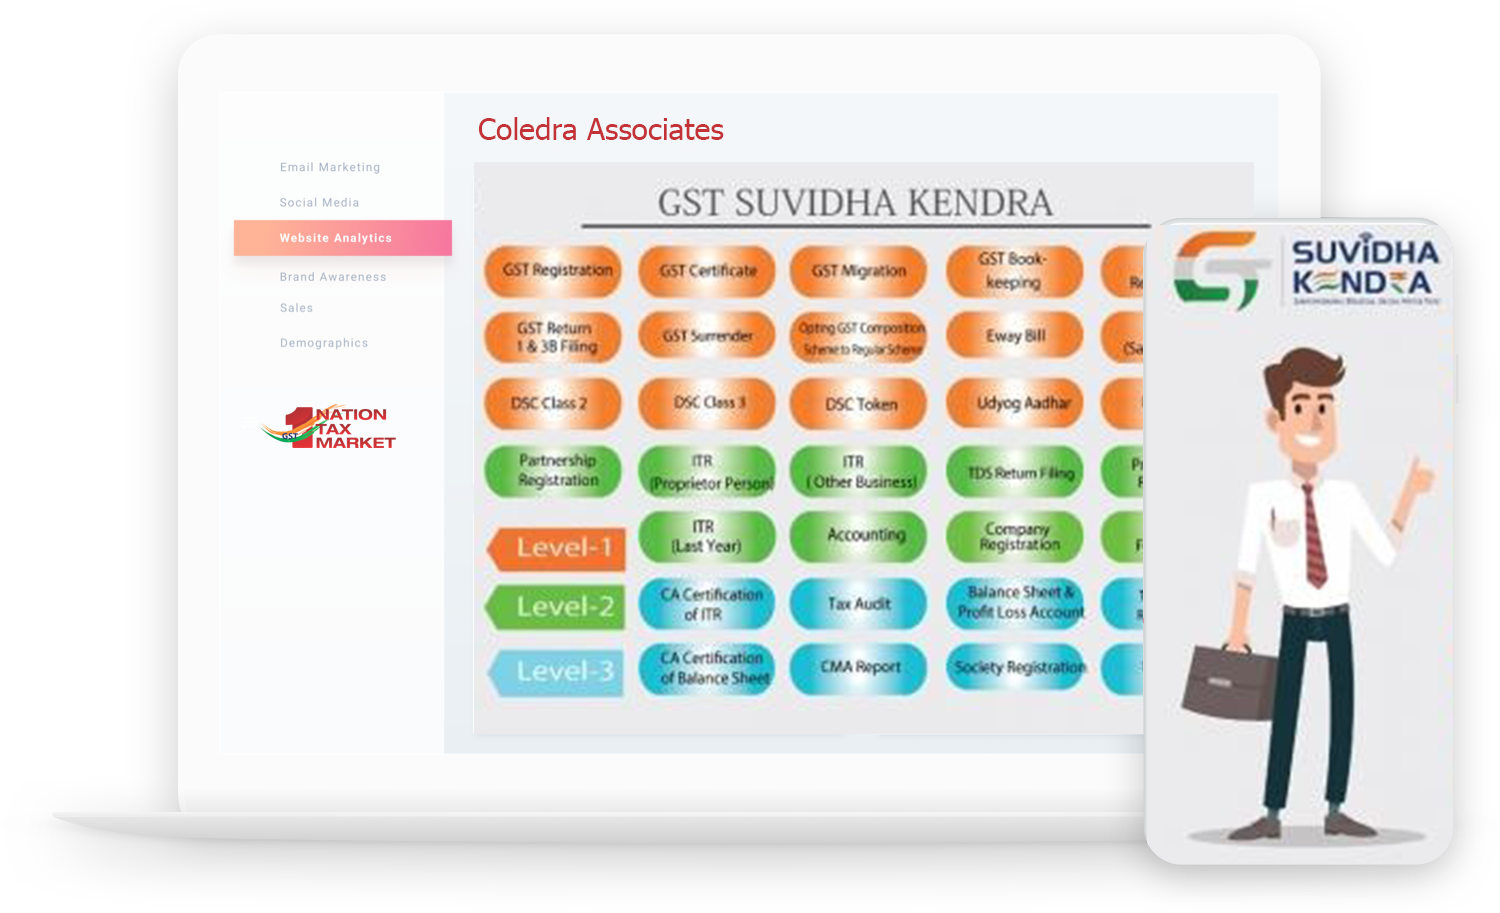 Coledra Associates on GST Suvidha Kendra